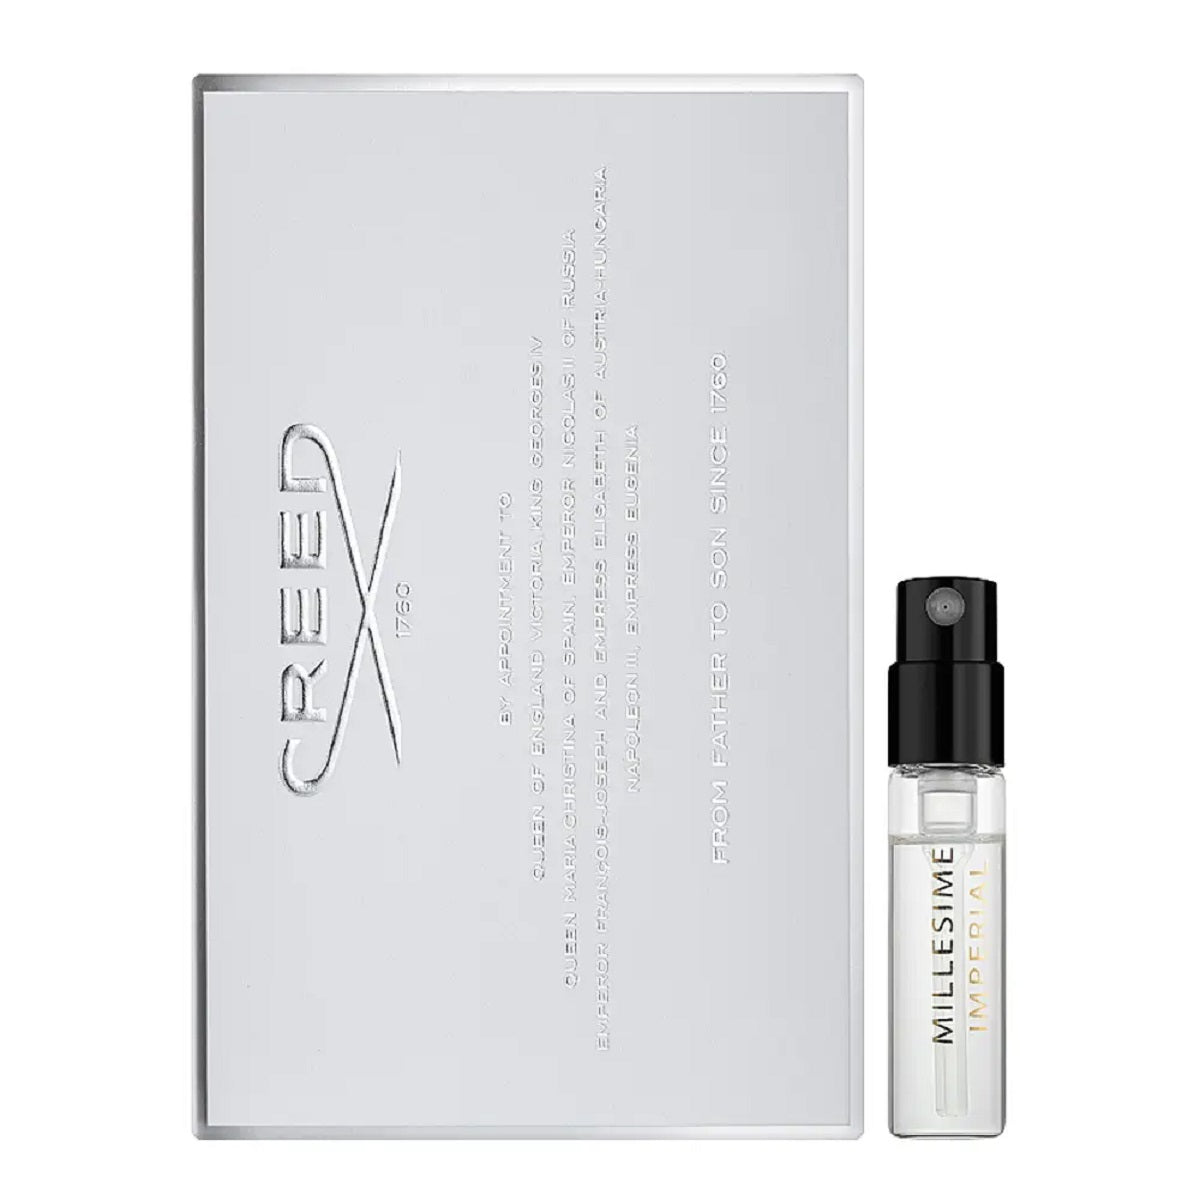 Creed Millesime Imperial edp 2ml 0.06 fl. oz. oficiálna vzorka parfumu